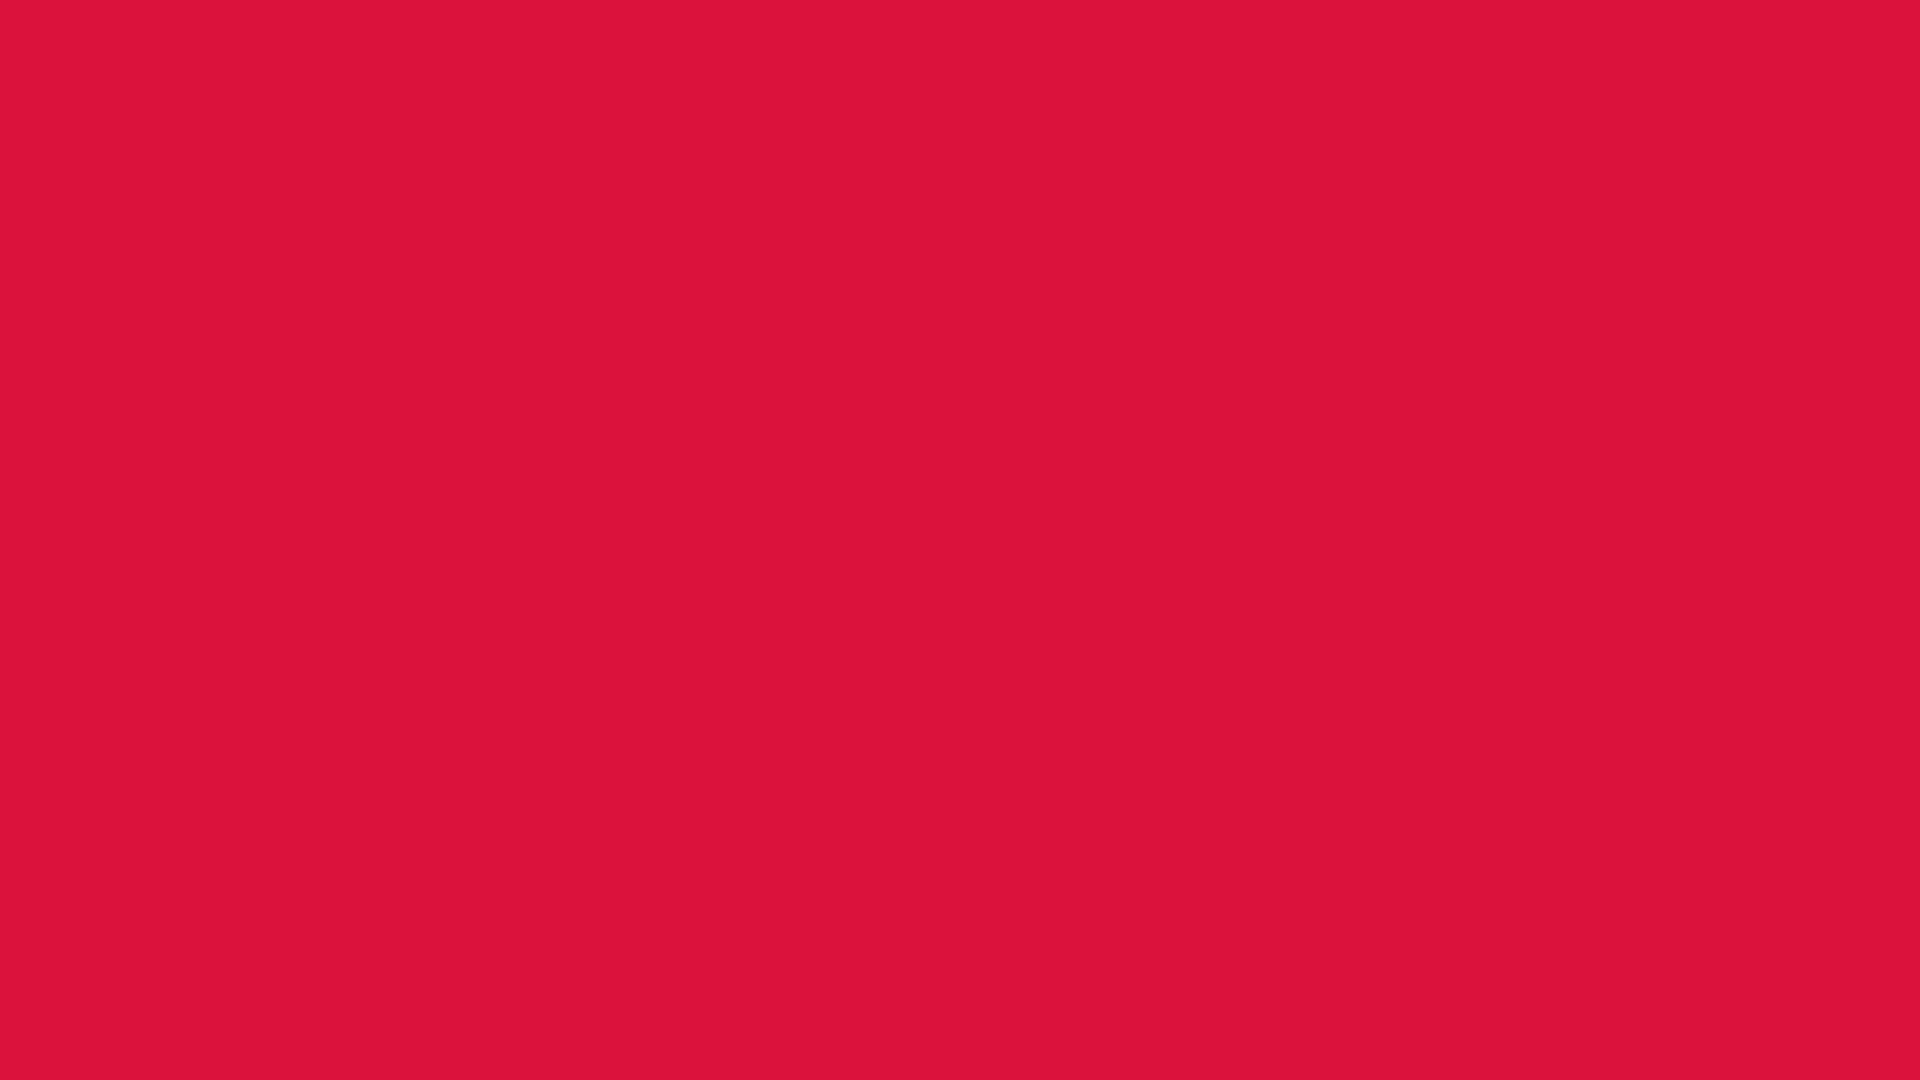 1920x1080 Crimson Solid Color Background